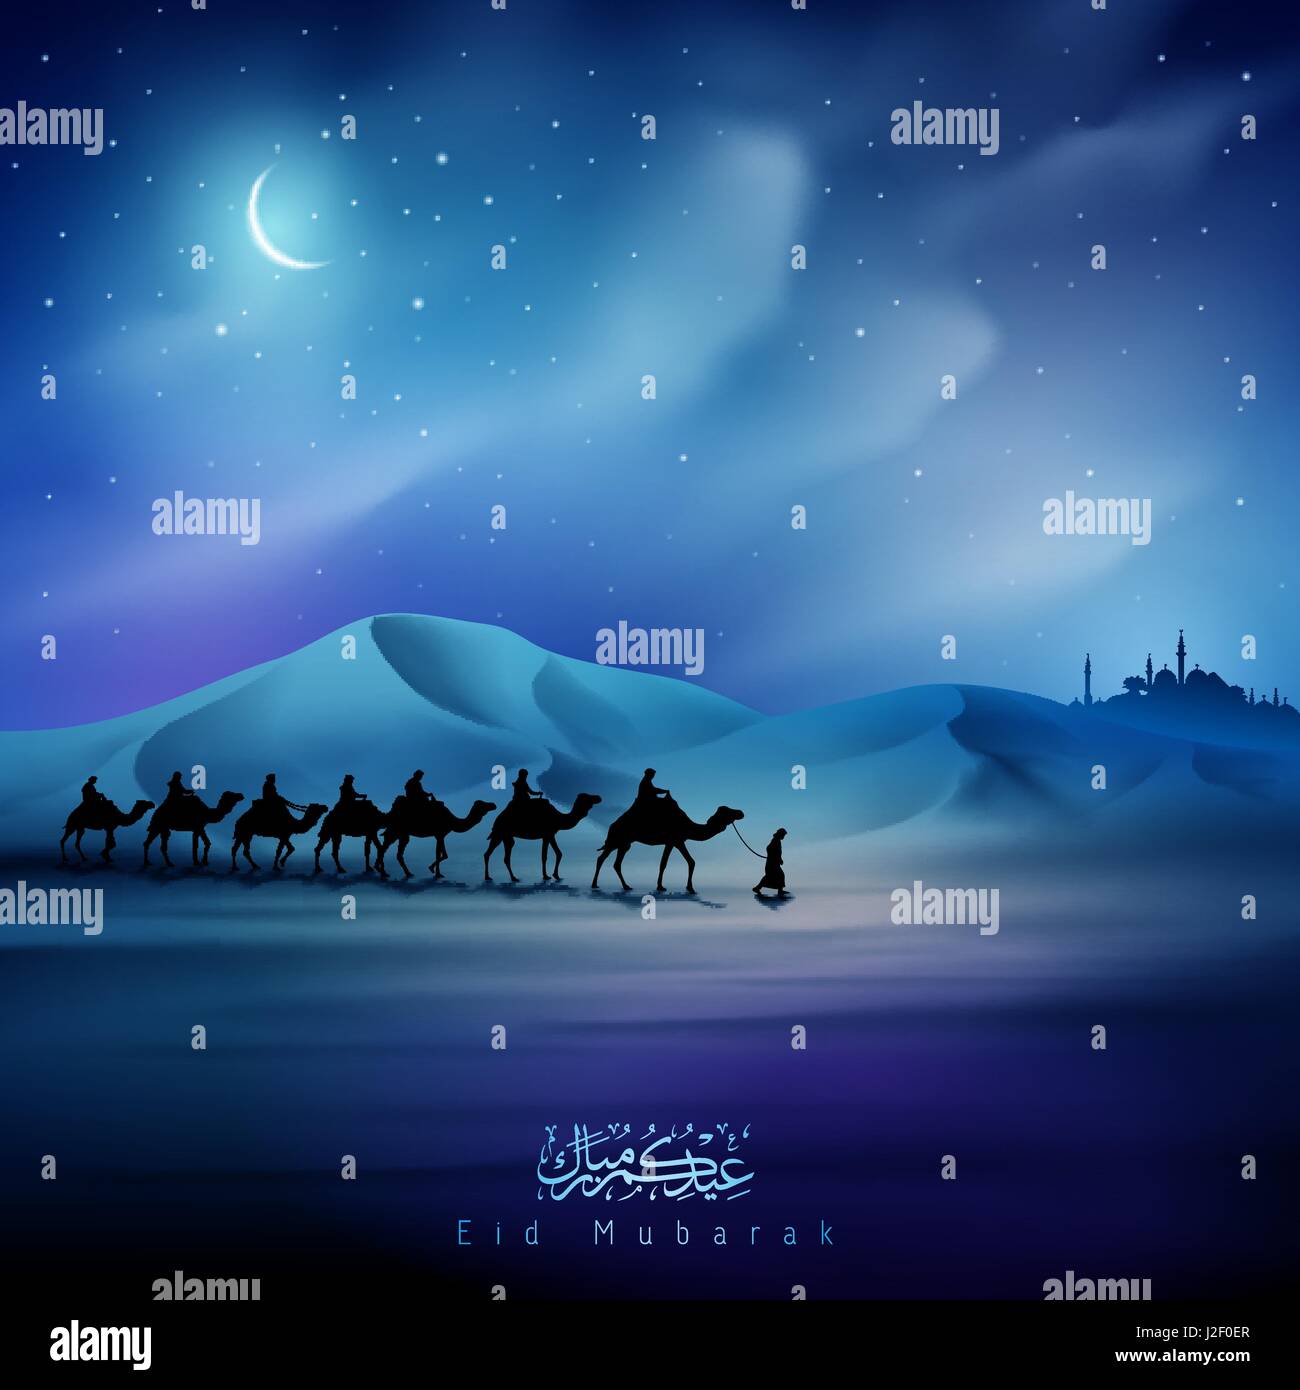 Eid Mubarak greeting card template night illustration 